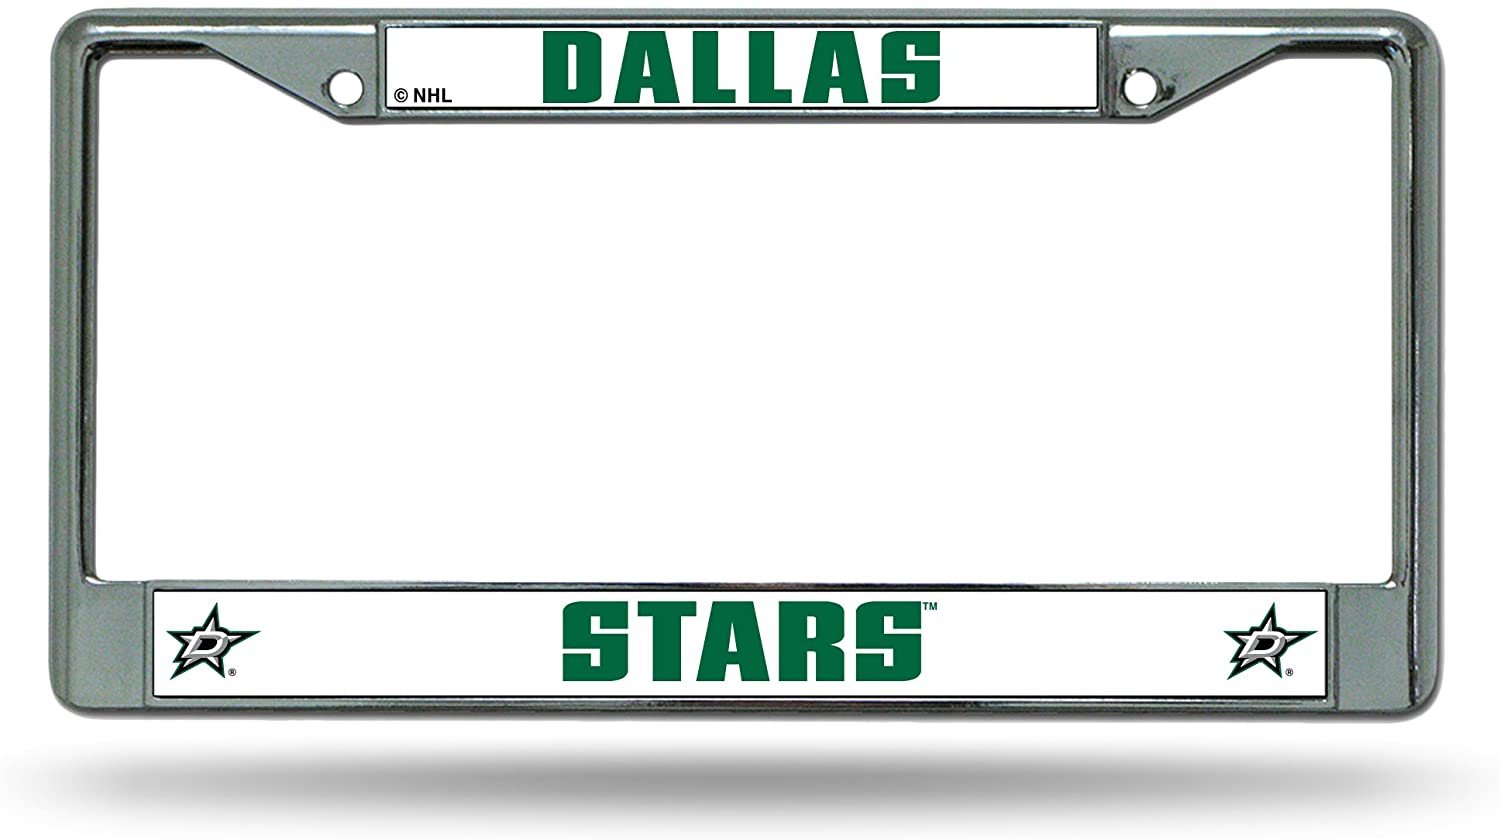 Dallas Stars Premium Metal License Plate Frame Chrome Tag Cover, 12x6 Inch